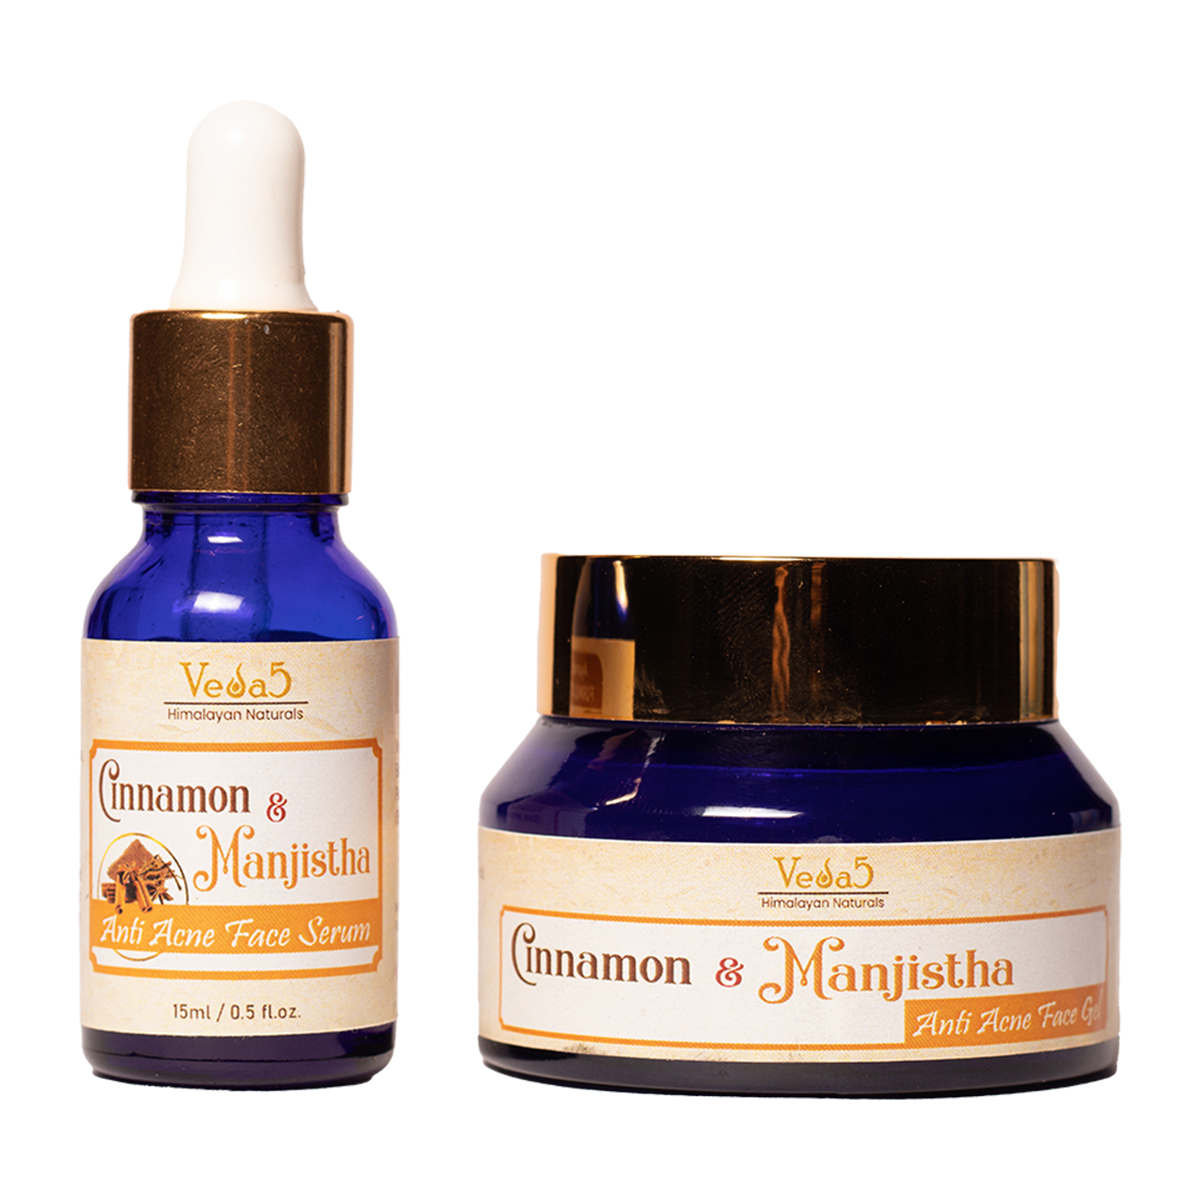 Cinnamon and Manjistha Face Gel and Serum Combo by Veda5 Himalayan Naturals 1